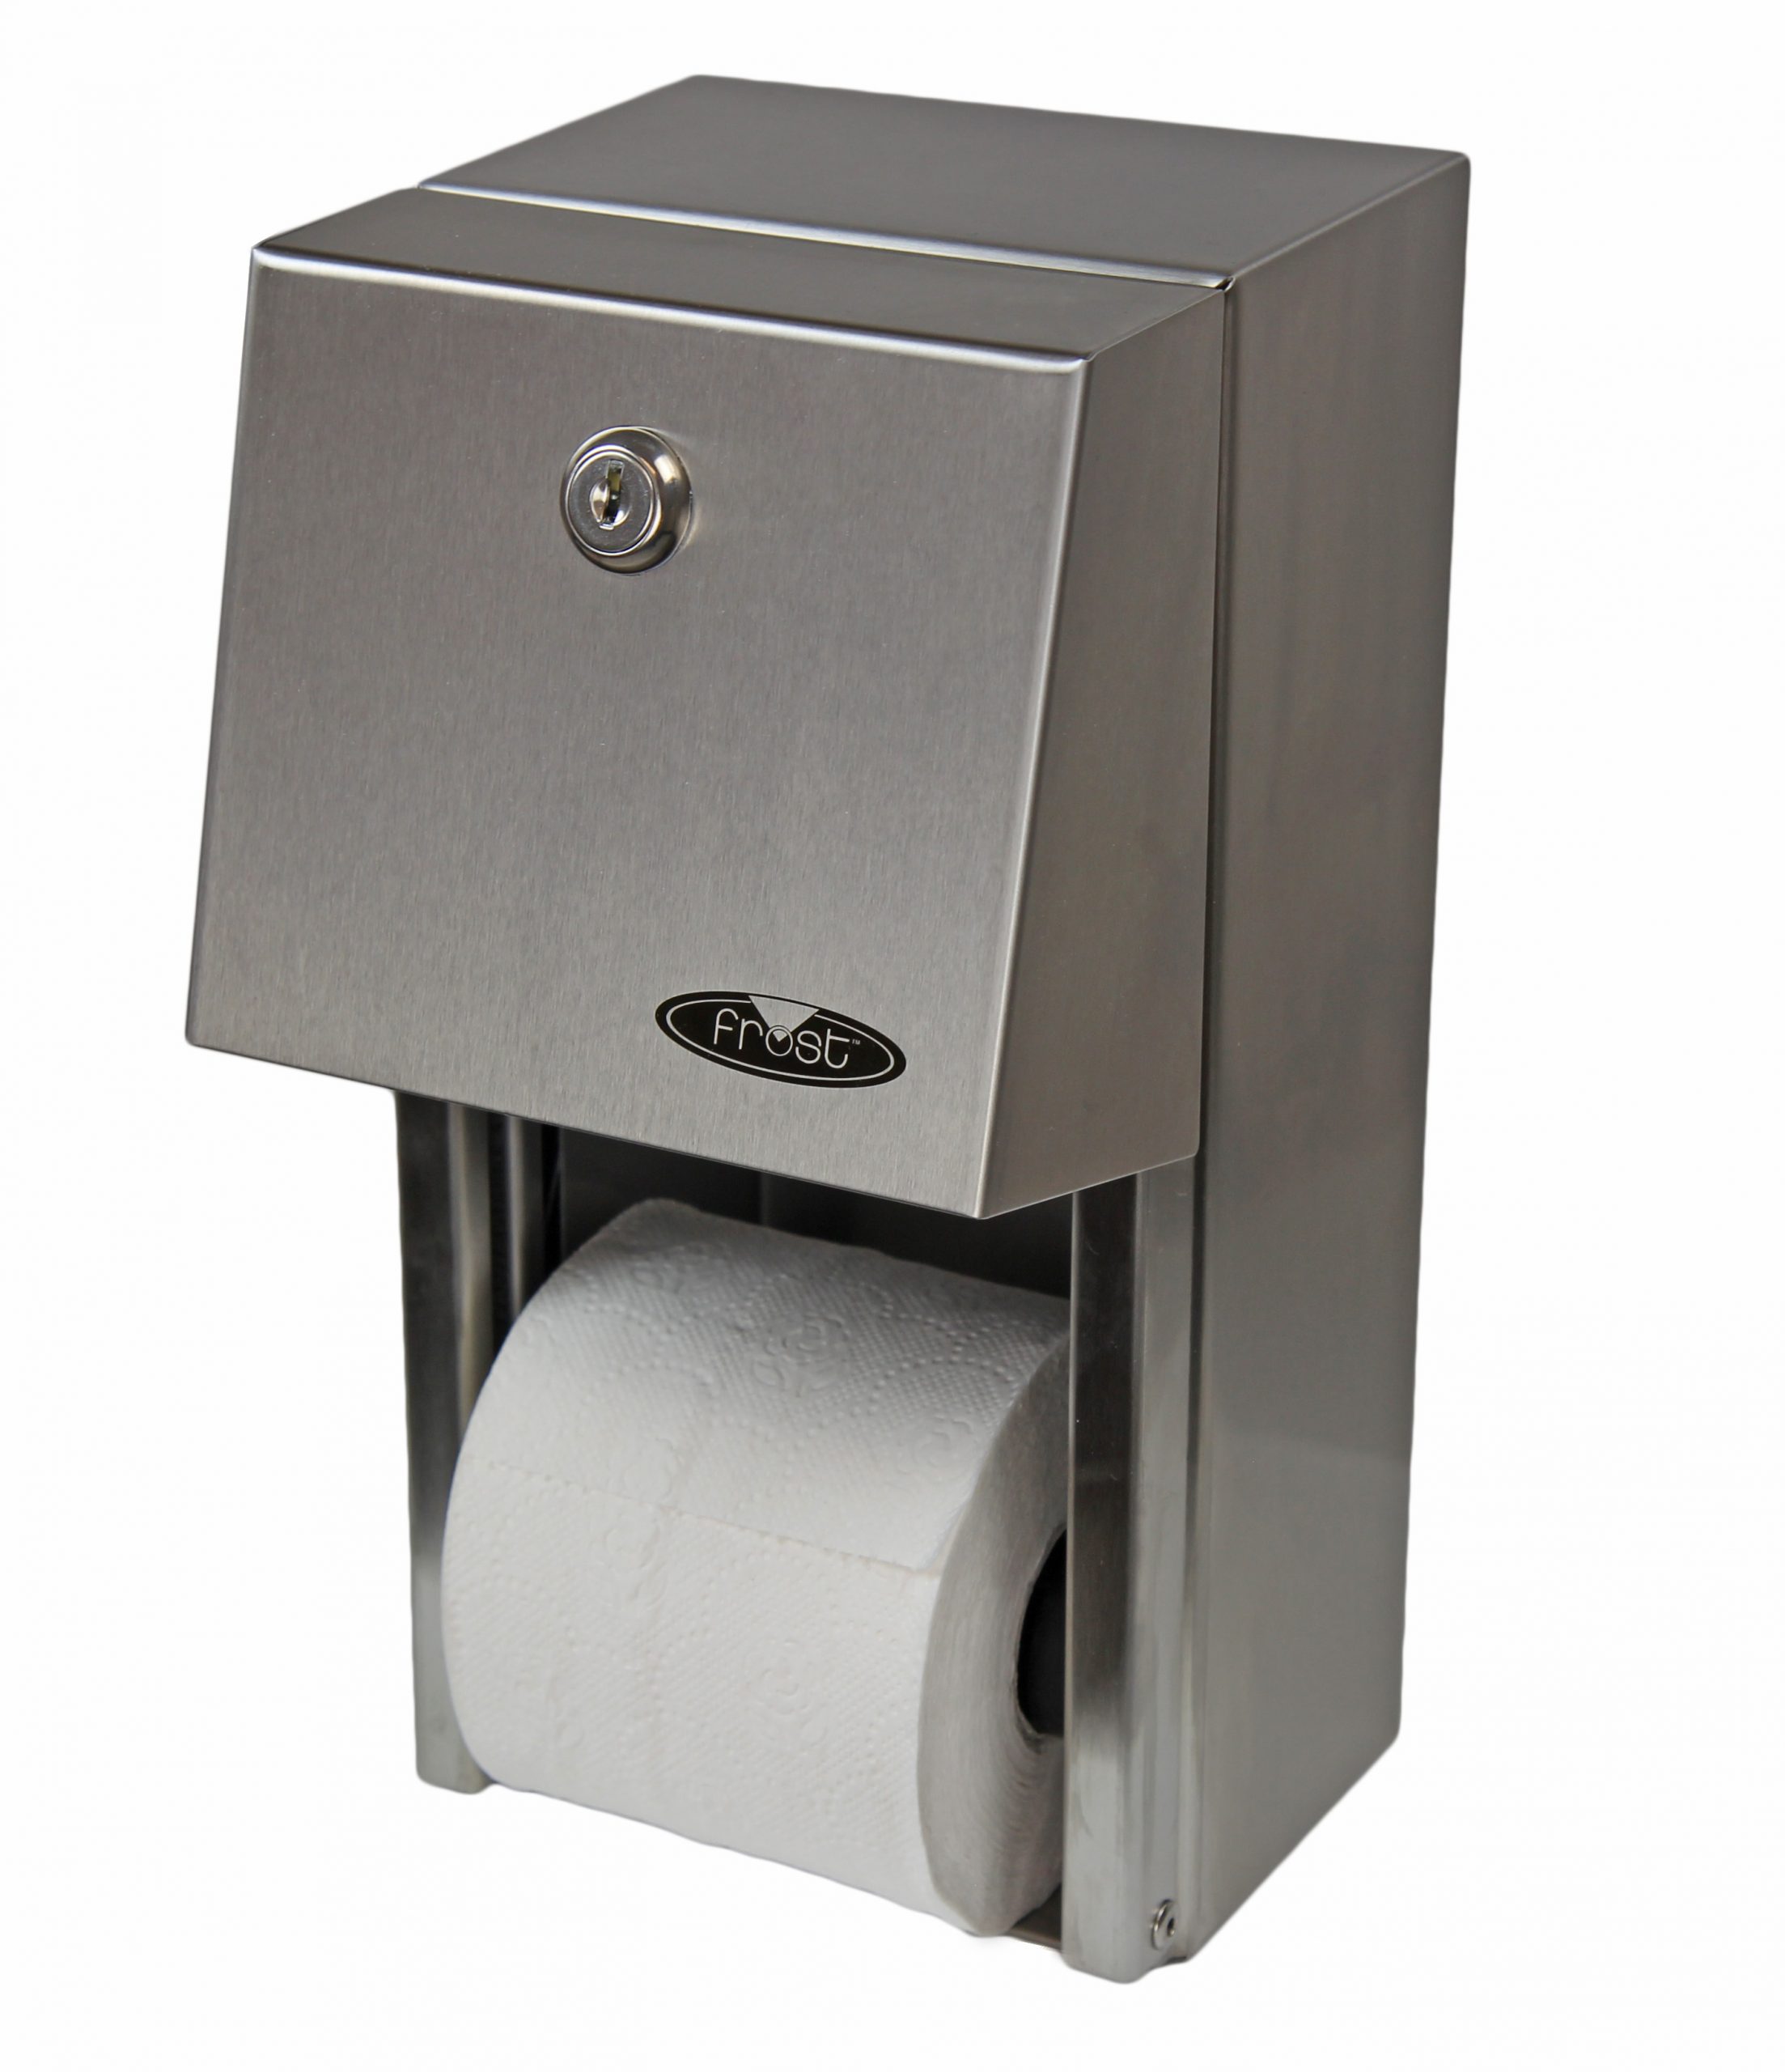 Roll toilet tissue dispenser made of stainless steel bright finish